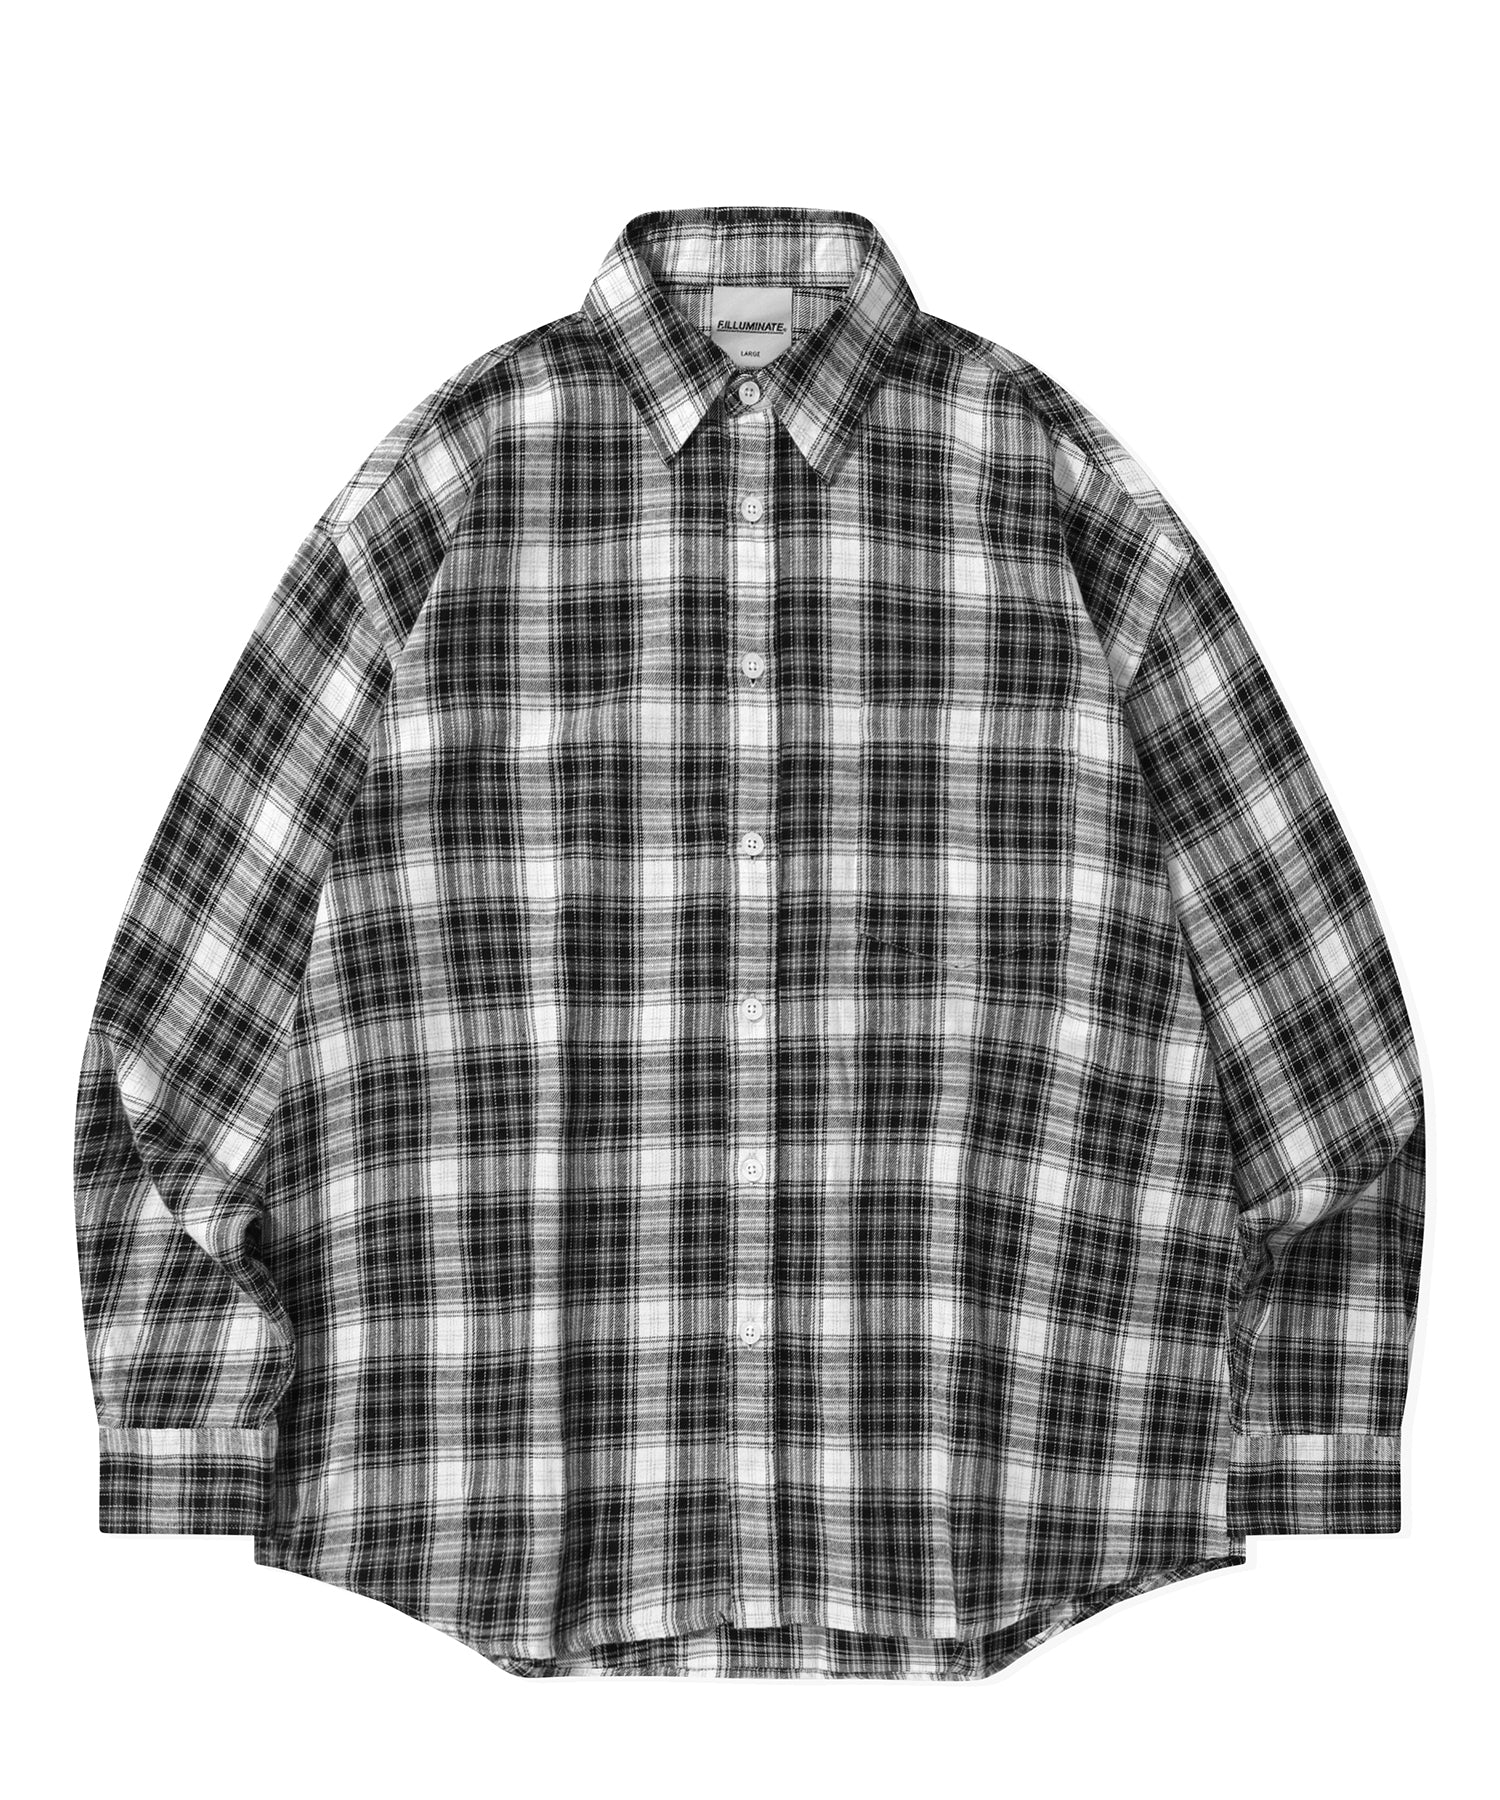 Overfit Madras Check Shirt-Black